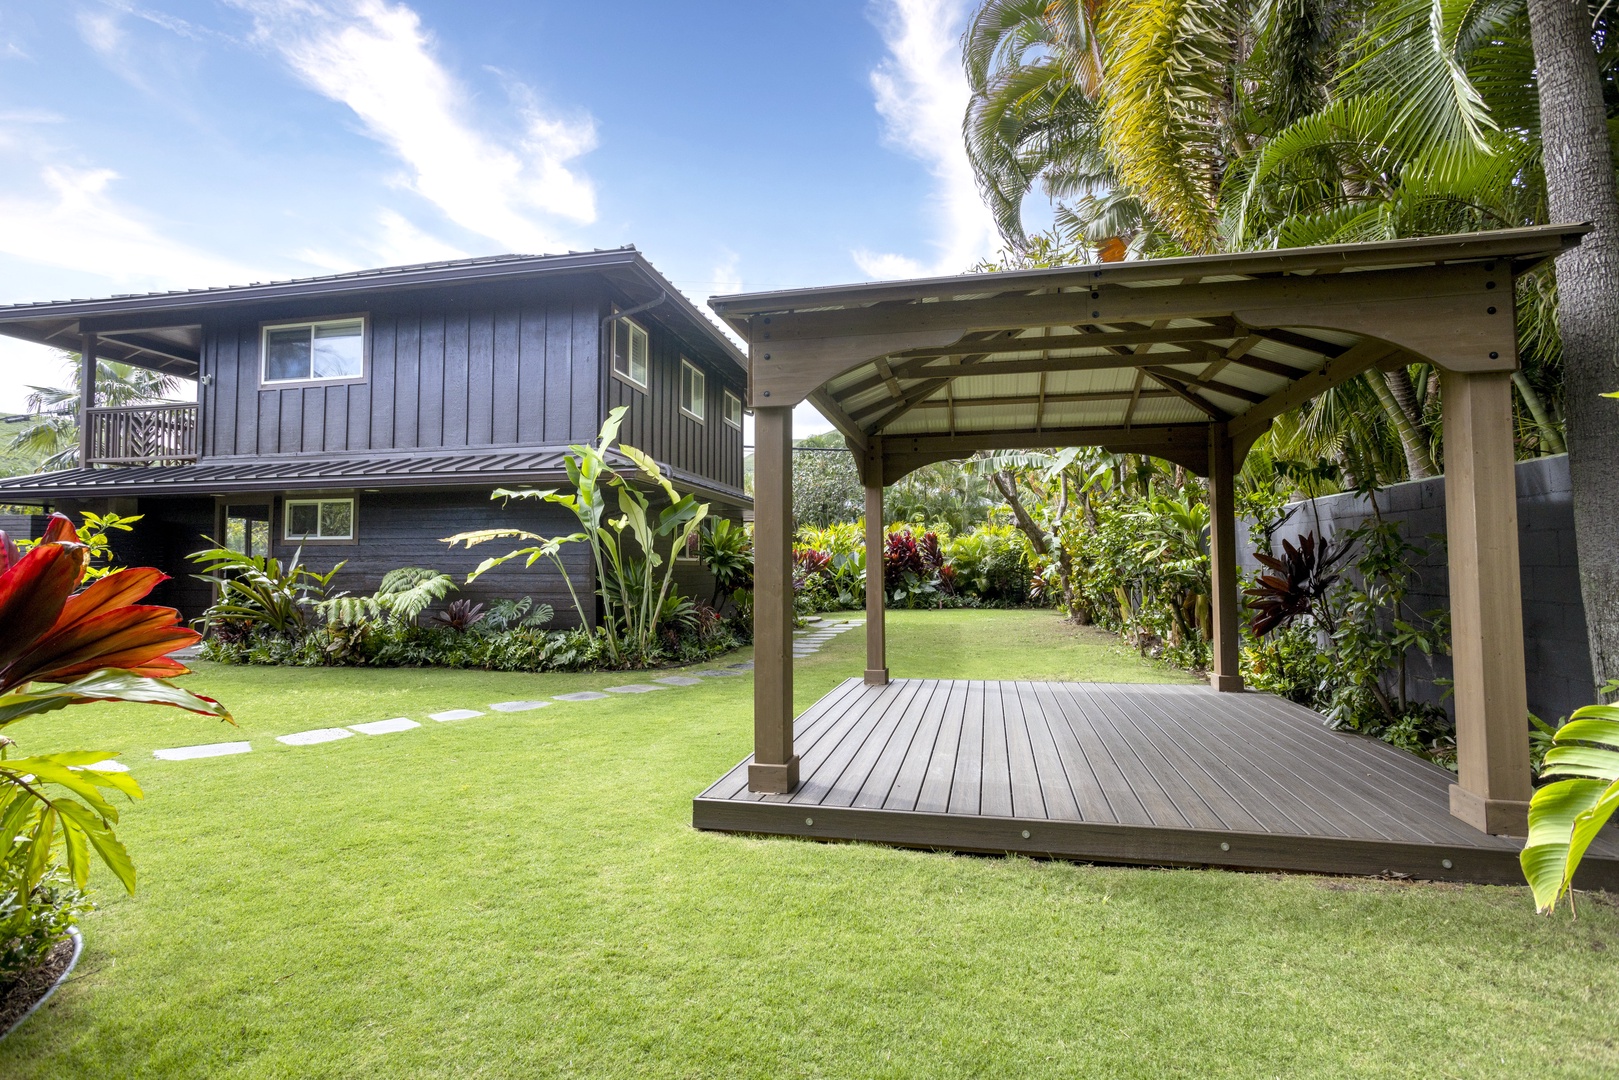 Kailua Vacation Rentals, Mokulua Seaside - Garden yard with gazebo, a perfect spot for family gatherings